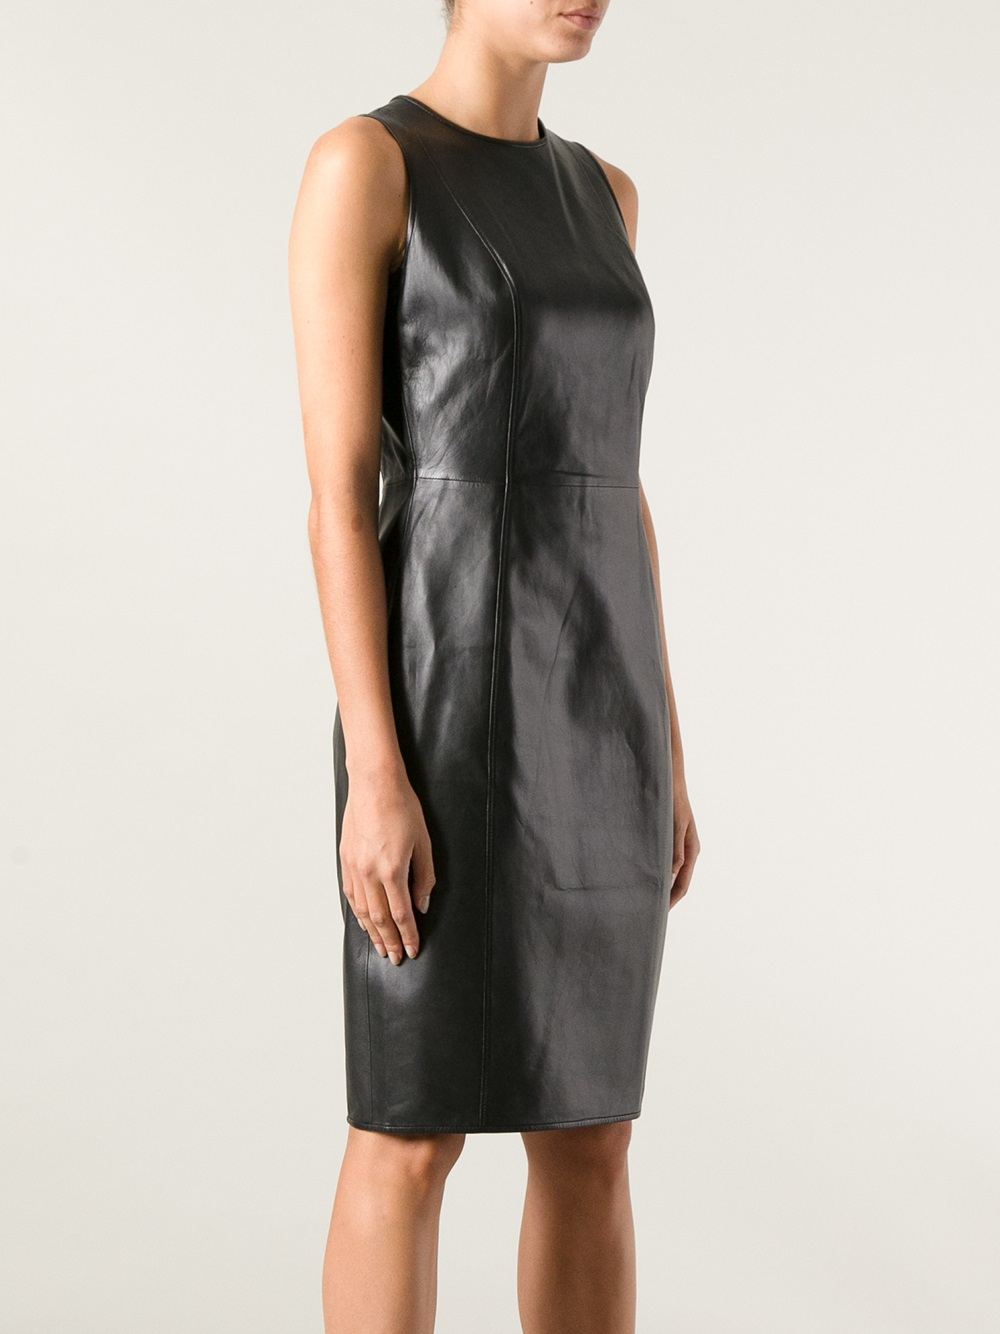 Lyst - Emporio Armani Sleeveless Leather Dress in Black